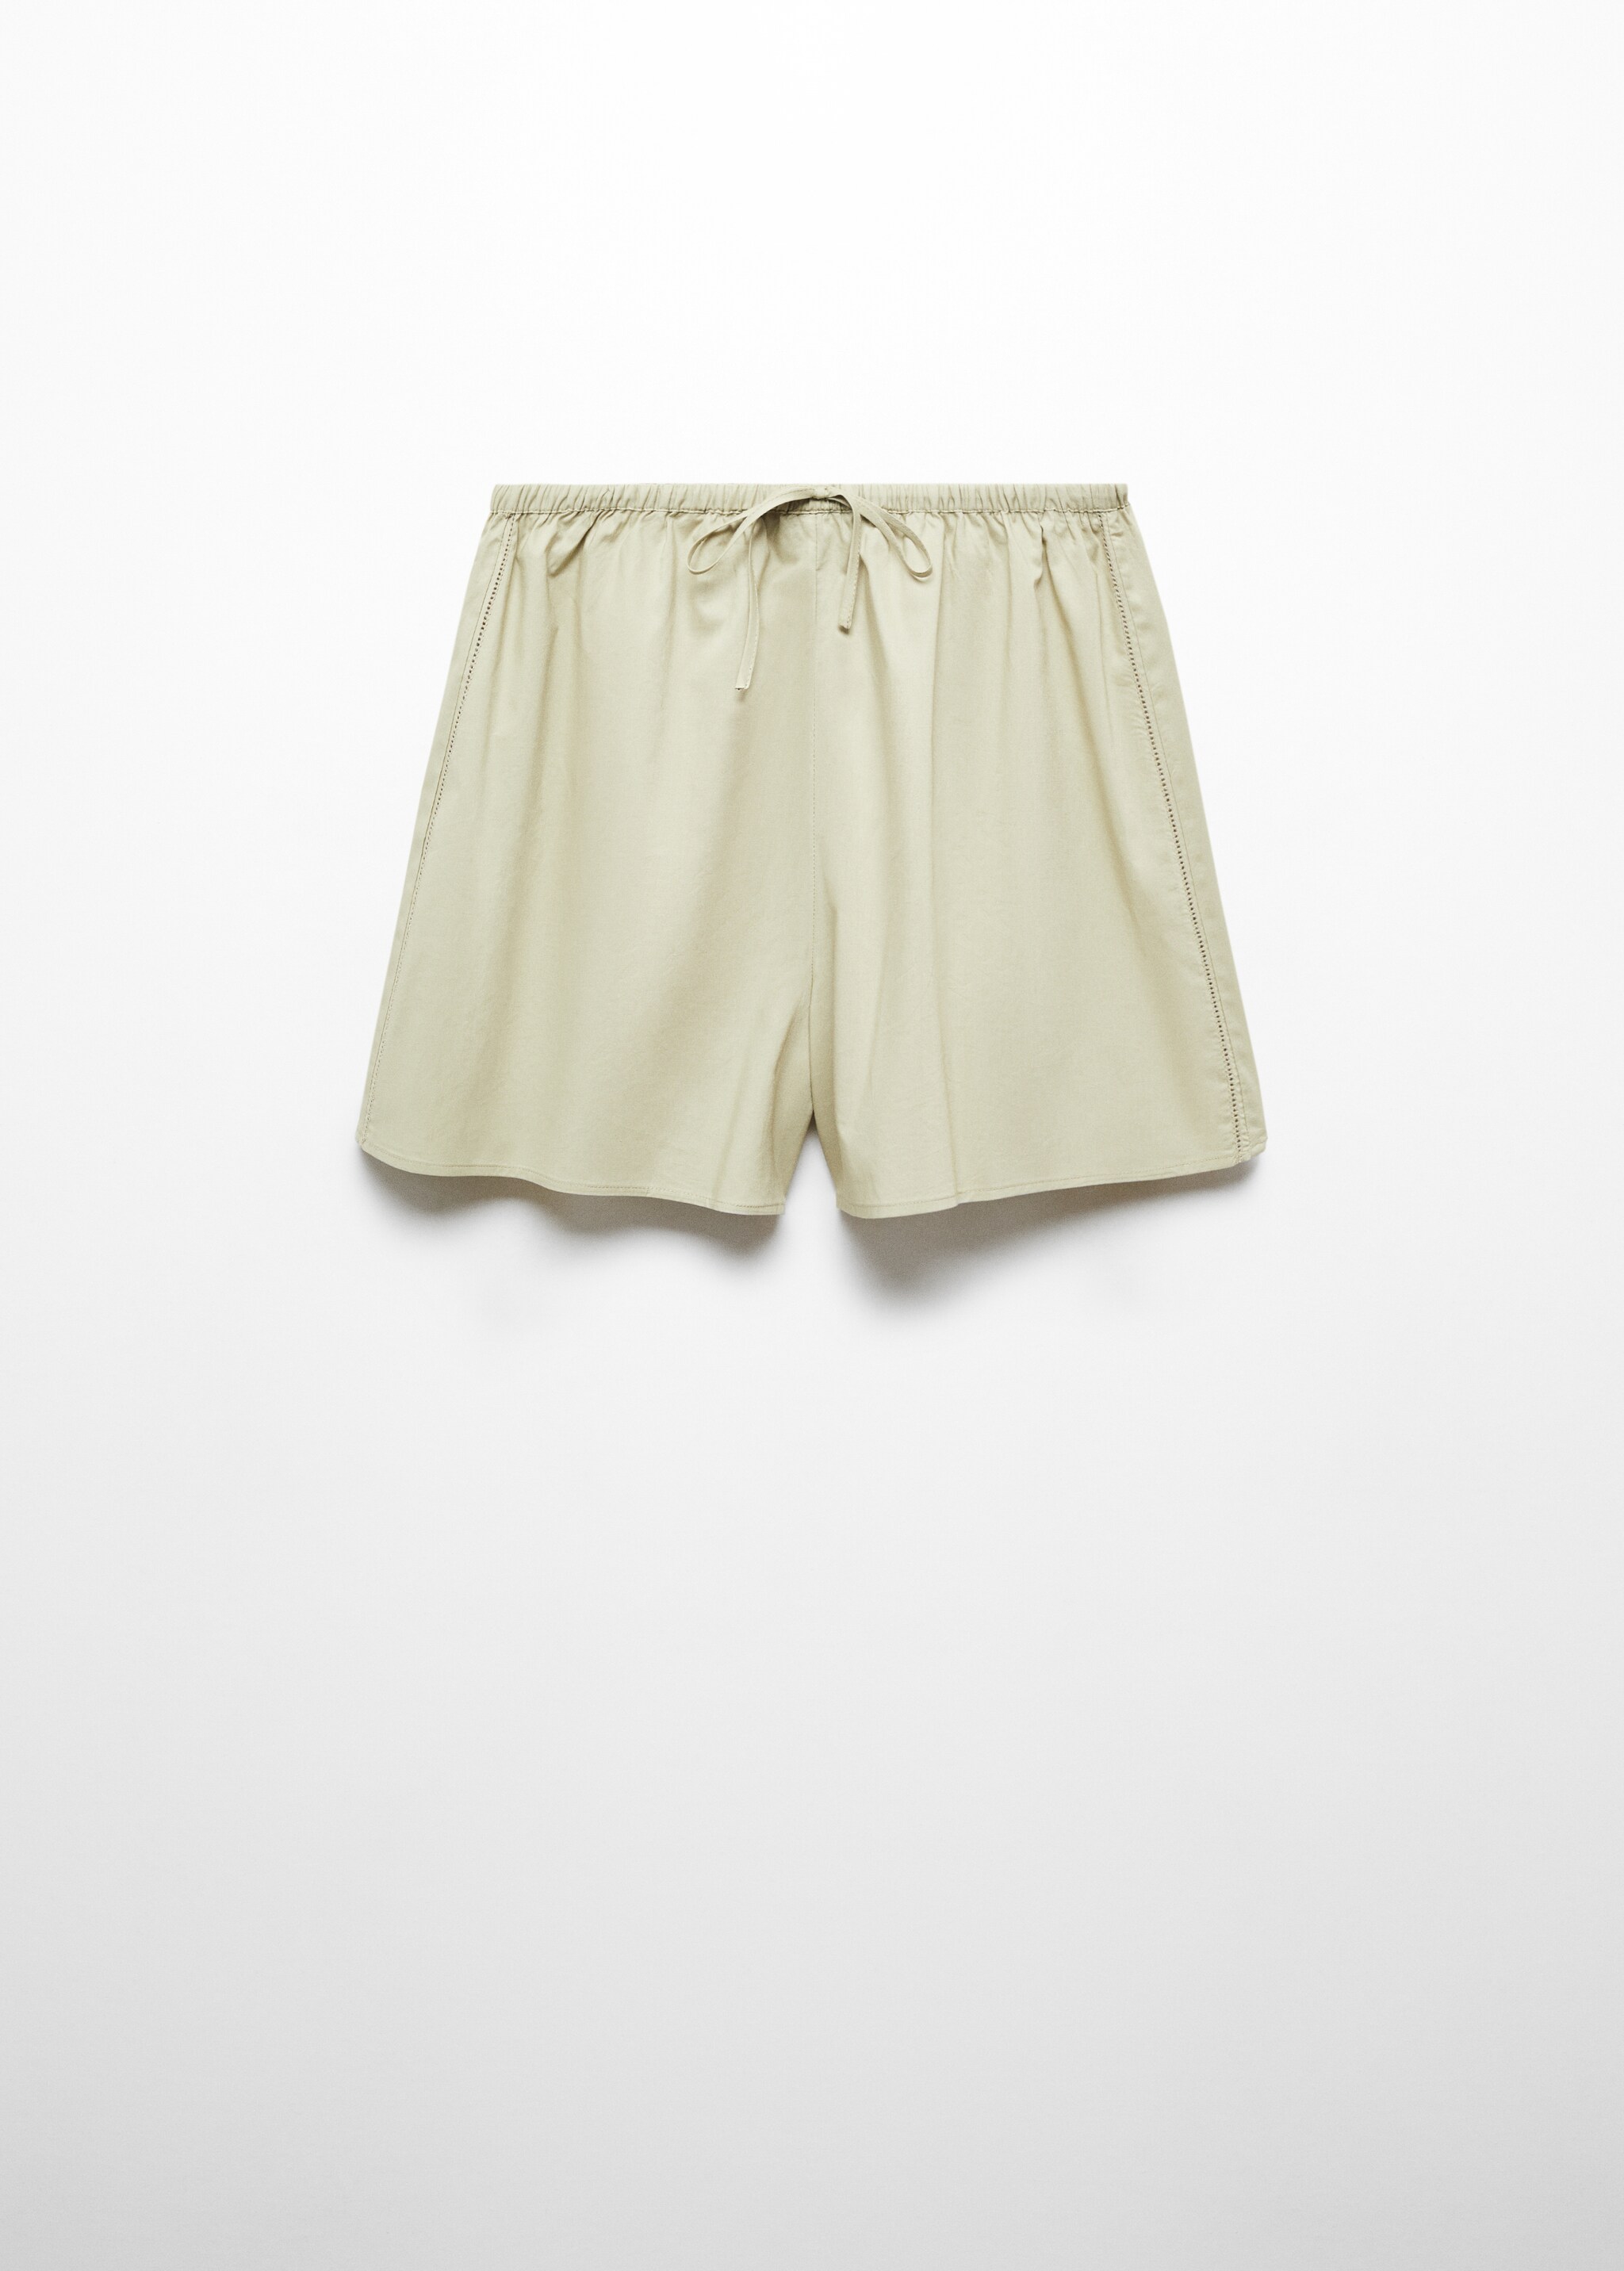 Cotton pyjama shorts with elastic waist - Article without model